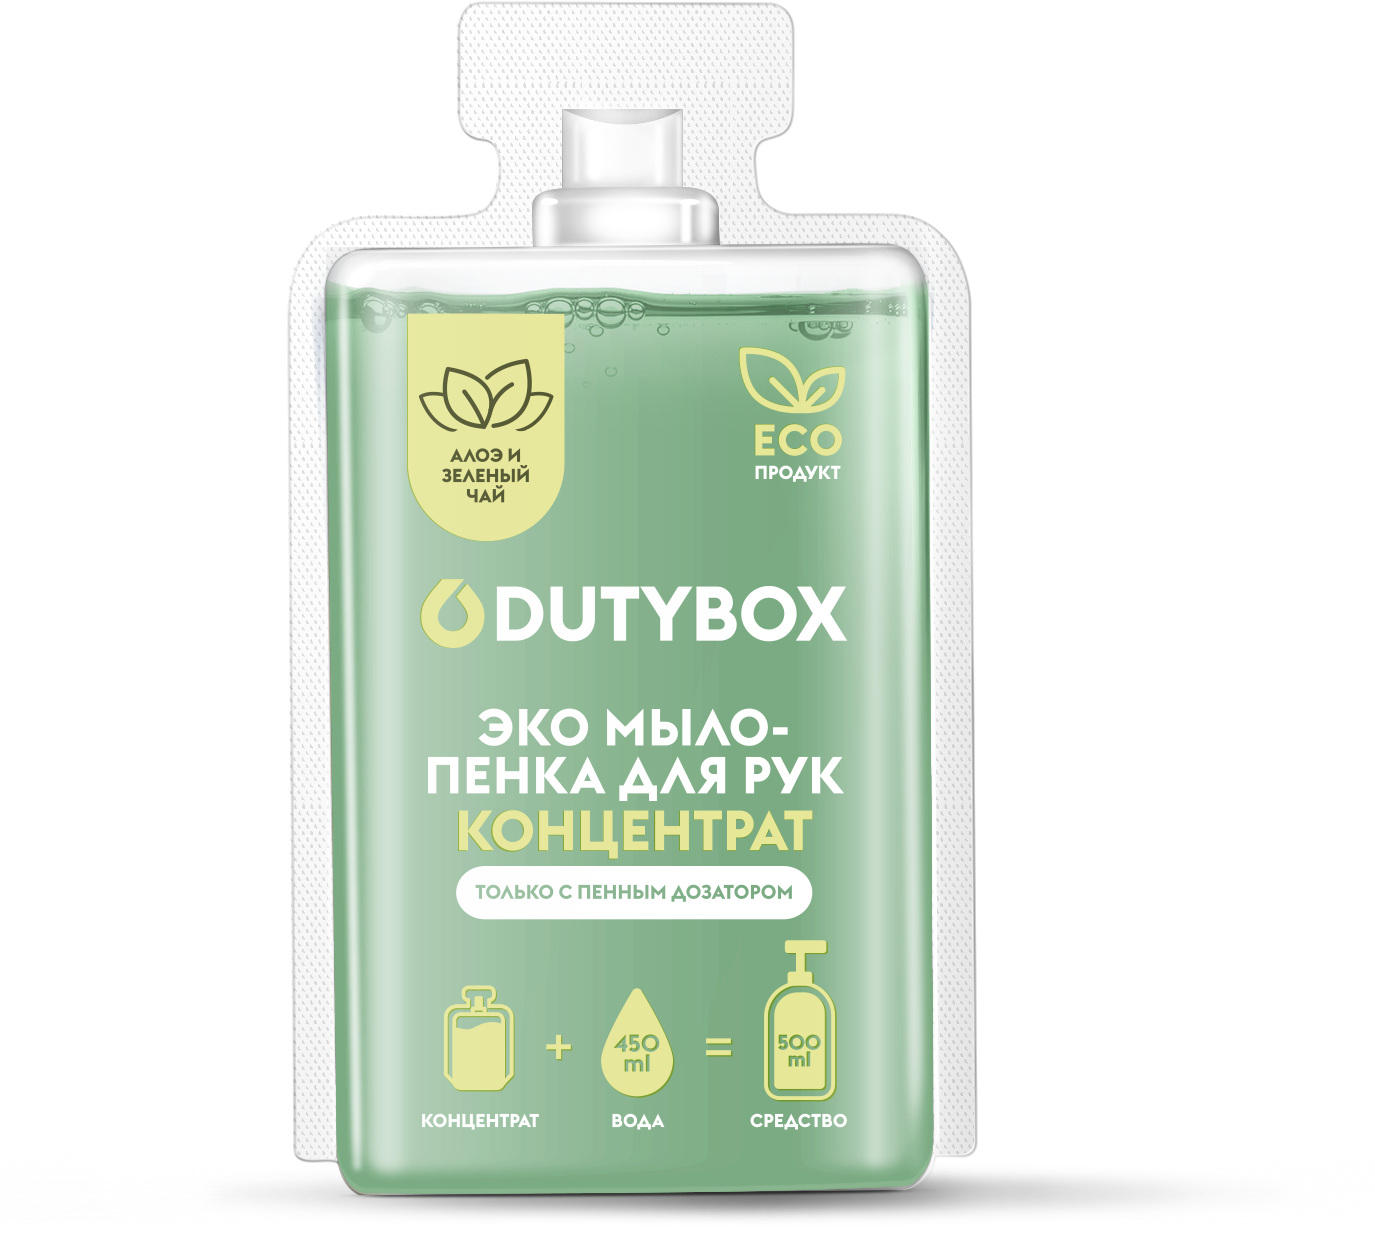 DUTYBOX Концентрат-Мыло-пенка для рук "Hands" Алое вера и зеленый чай 50 мл (1шт*50мл) 